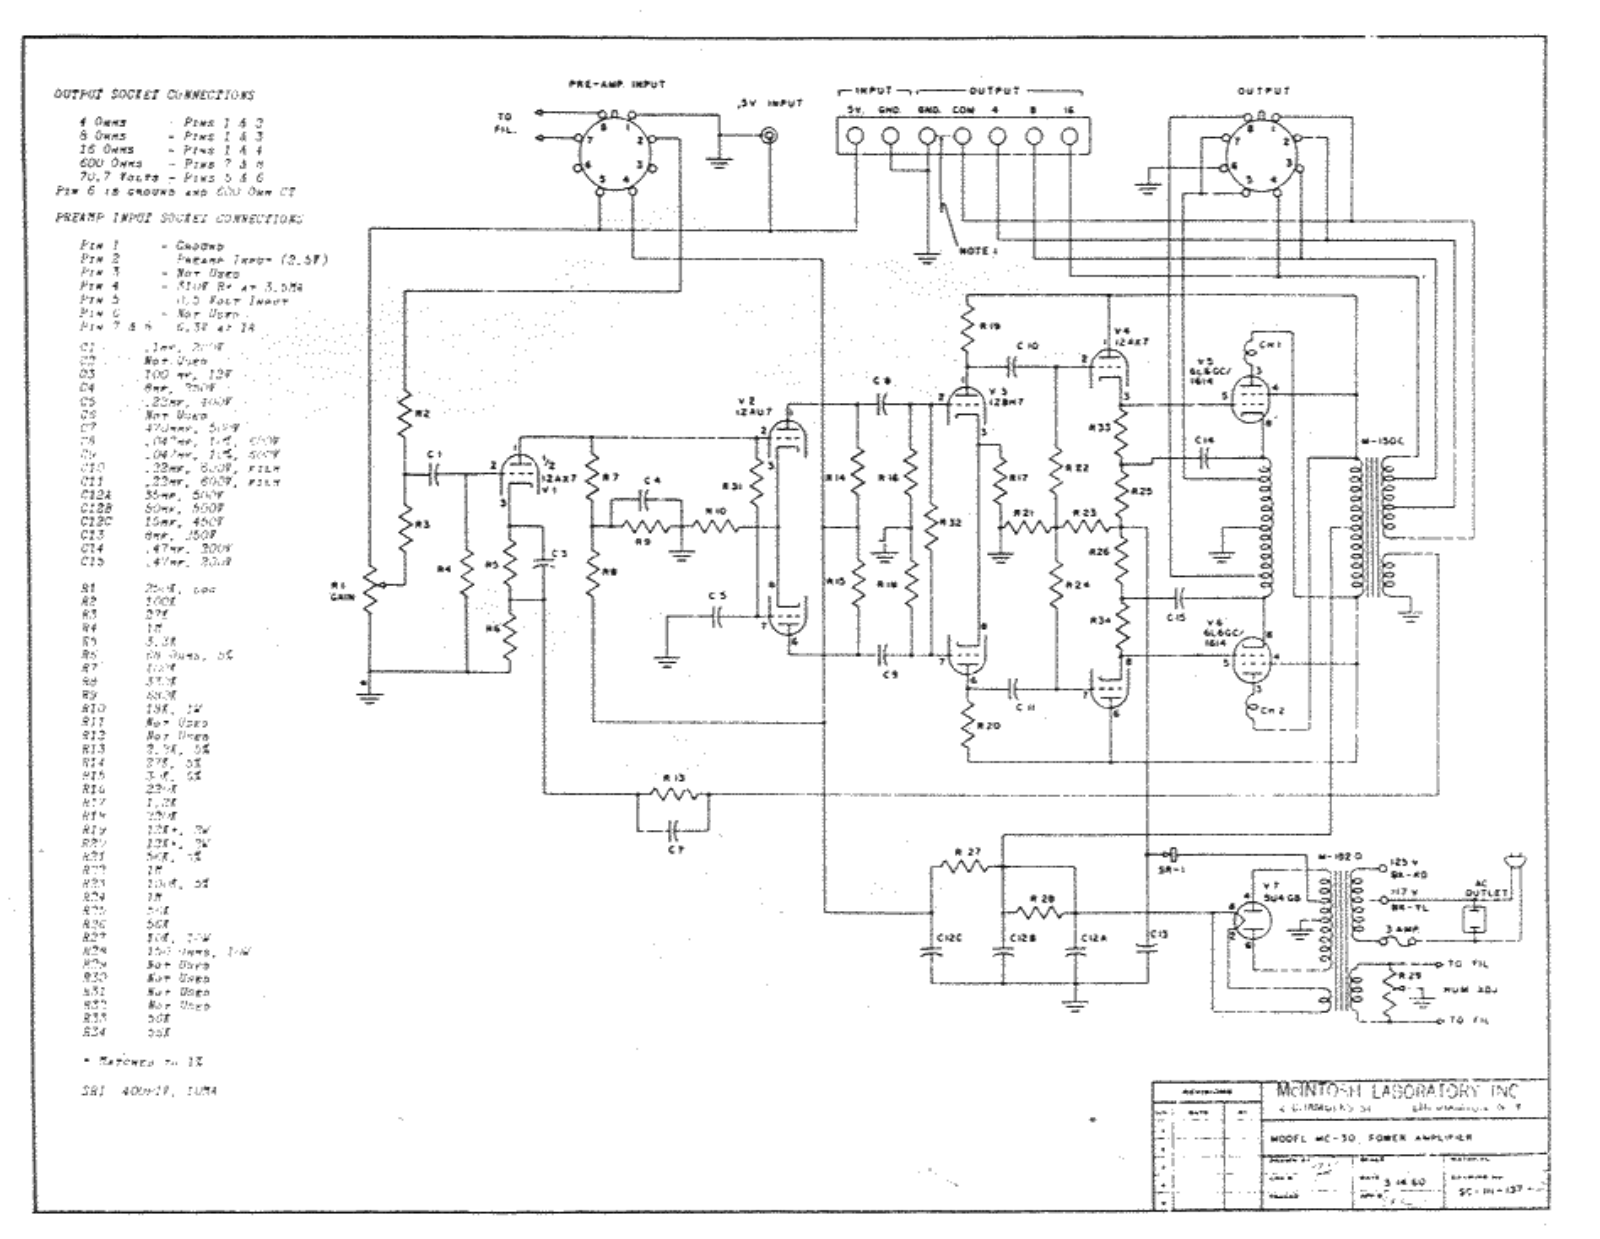 Mcintosh mc30 schematic